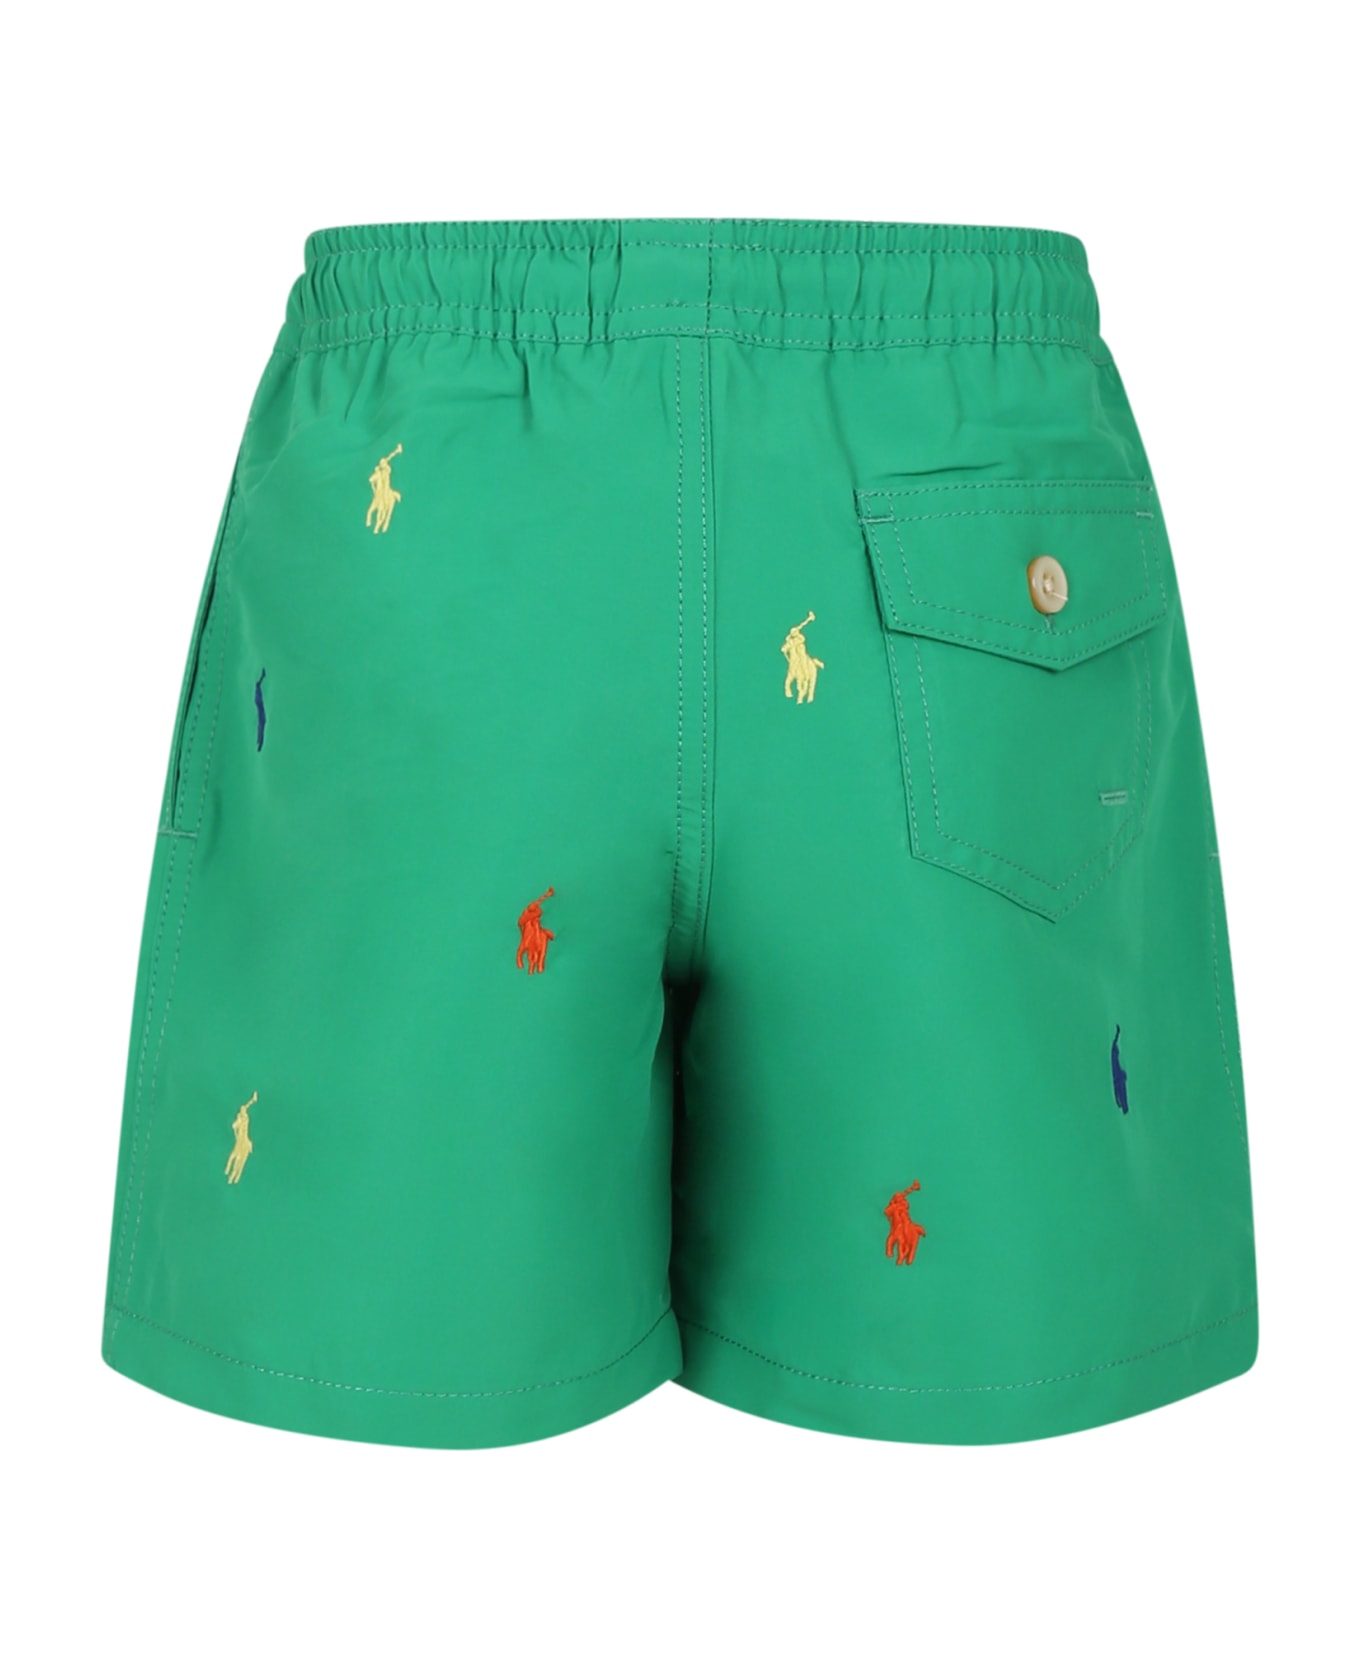 Ralph Lauren Green Swimsuit For Boy With Pony - Green 水着